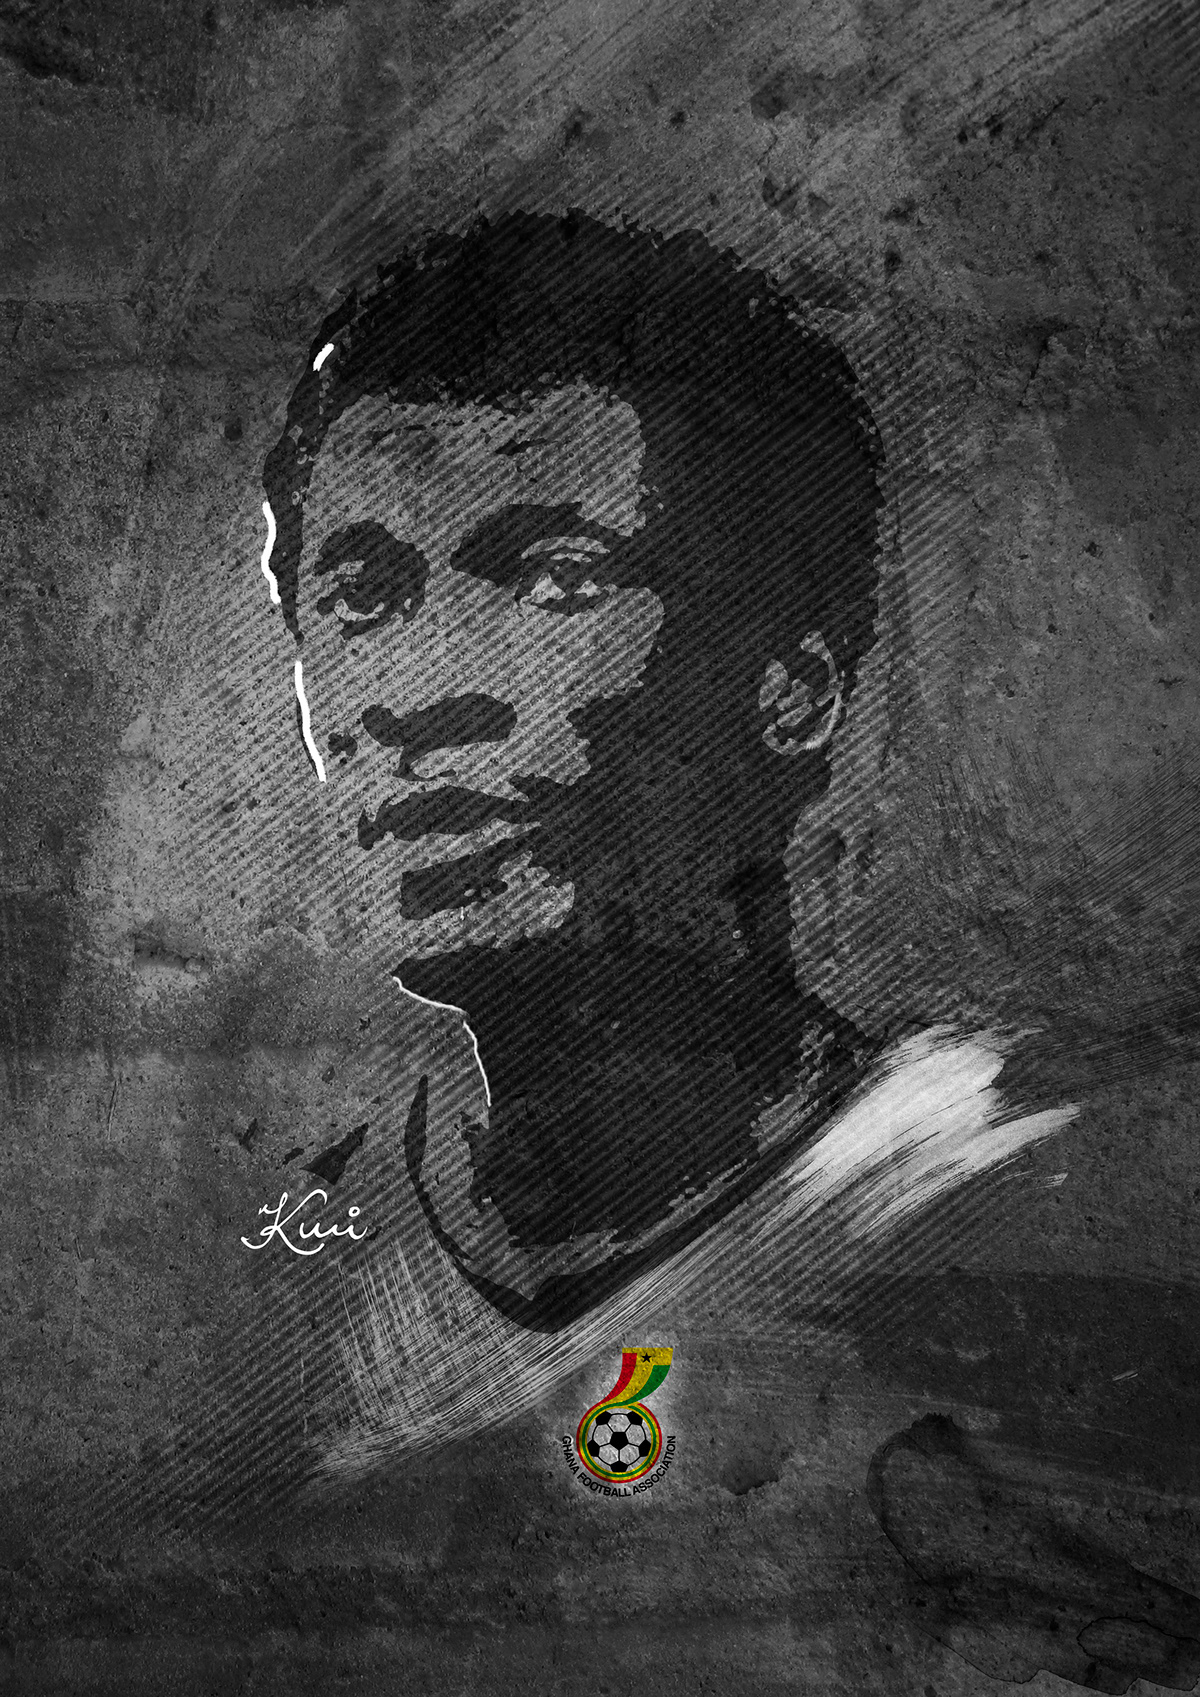 Kwei-Kofi Ghana deviant art deviant Artpearance africa Kwame Nkrumah Osagyefo baby Jet Asamoah Gyan Dansoman Photoshop cc lightroom